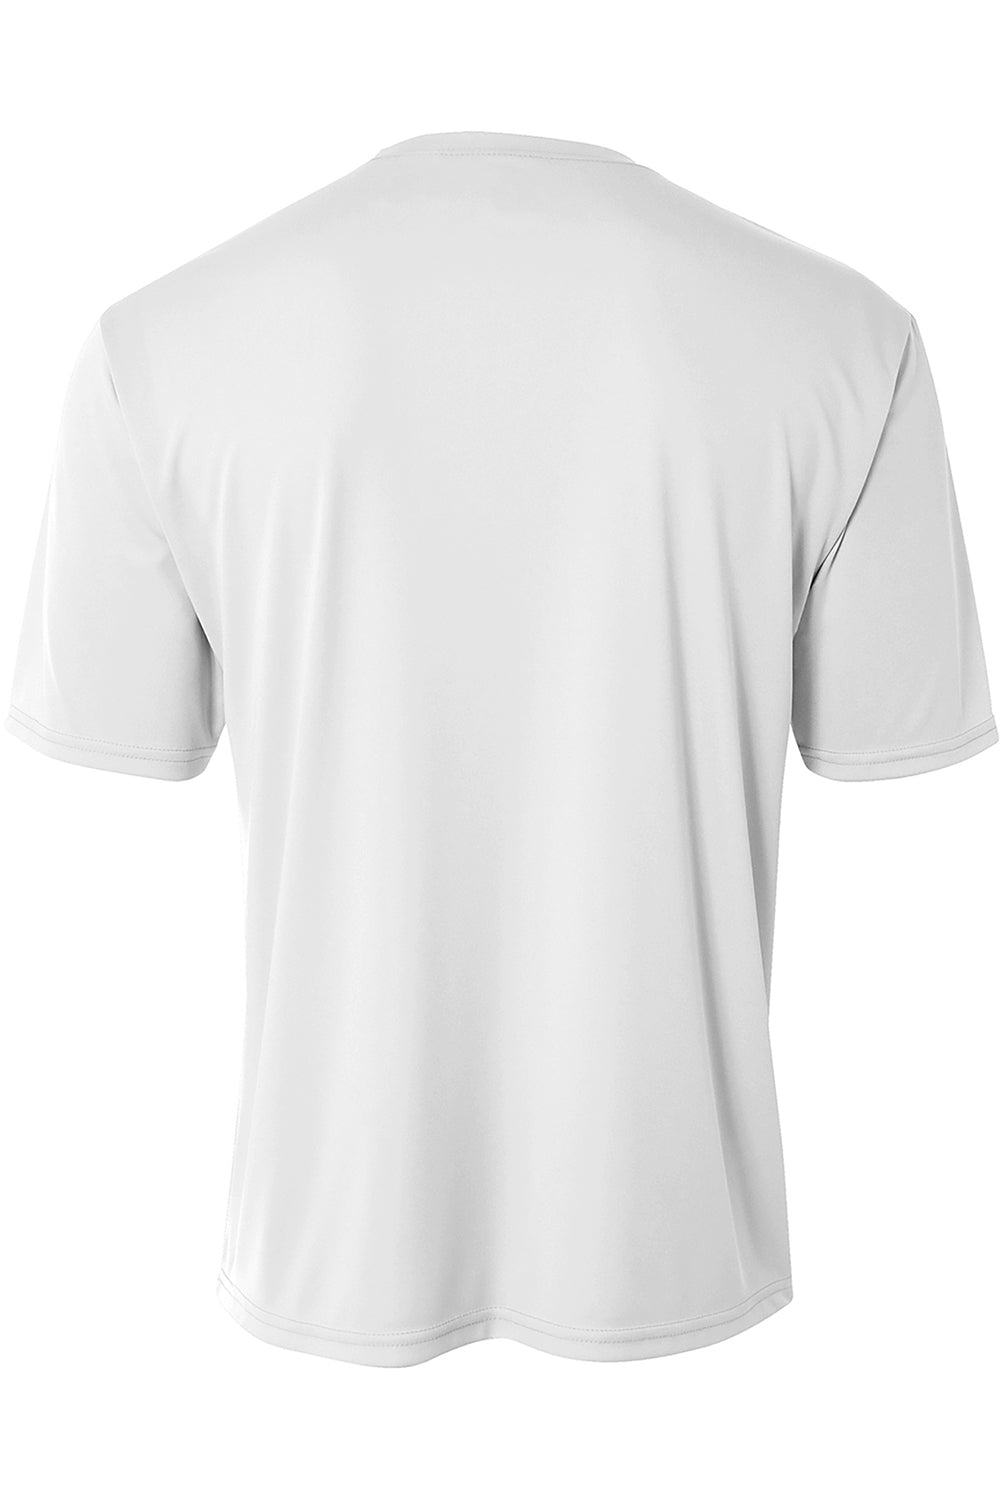 A4 N3402 Mens Sprint Performance Moisture Wicking Short Sleeve Crewneck T-Shirt White Flat Back